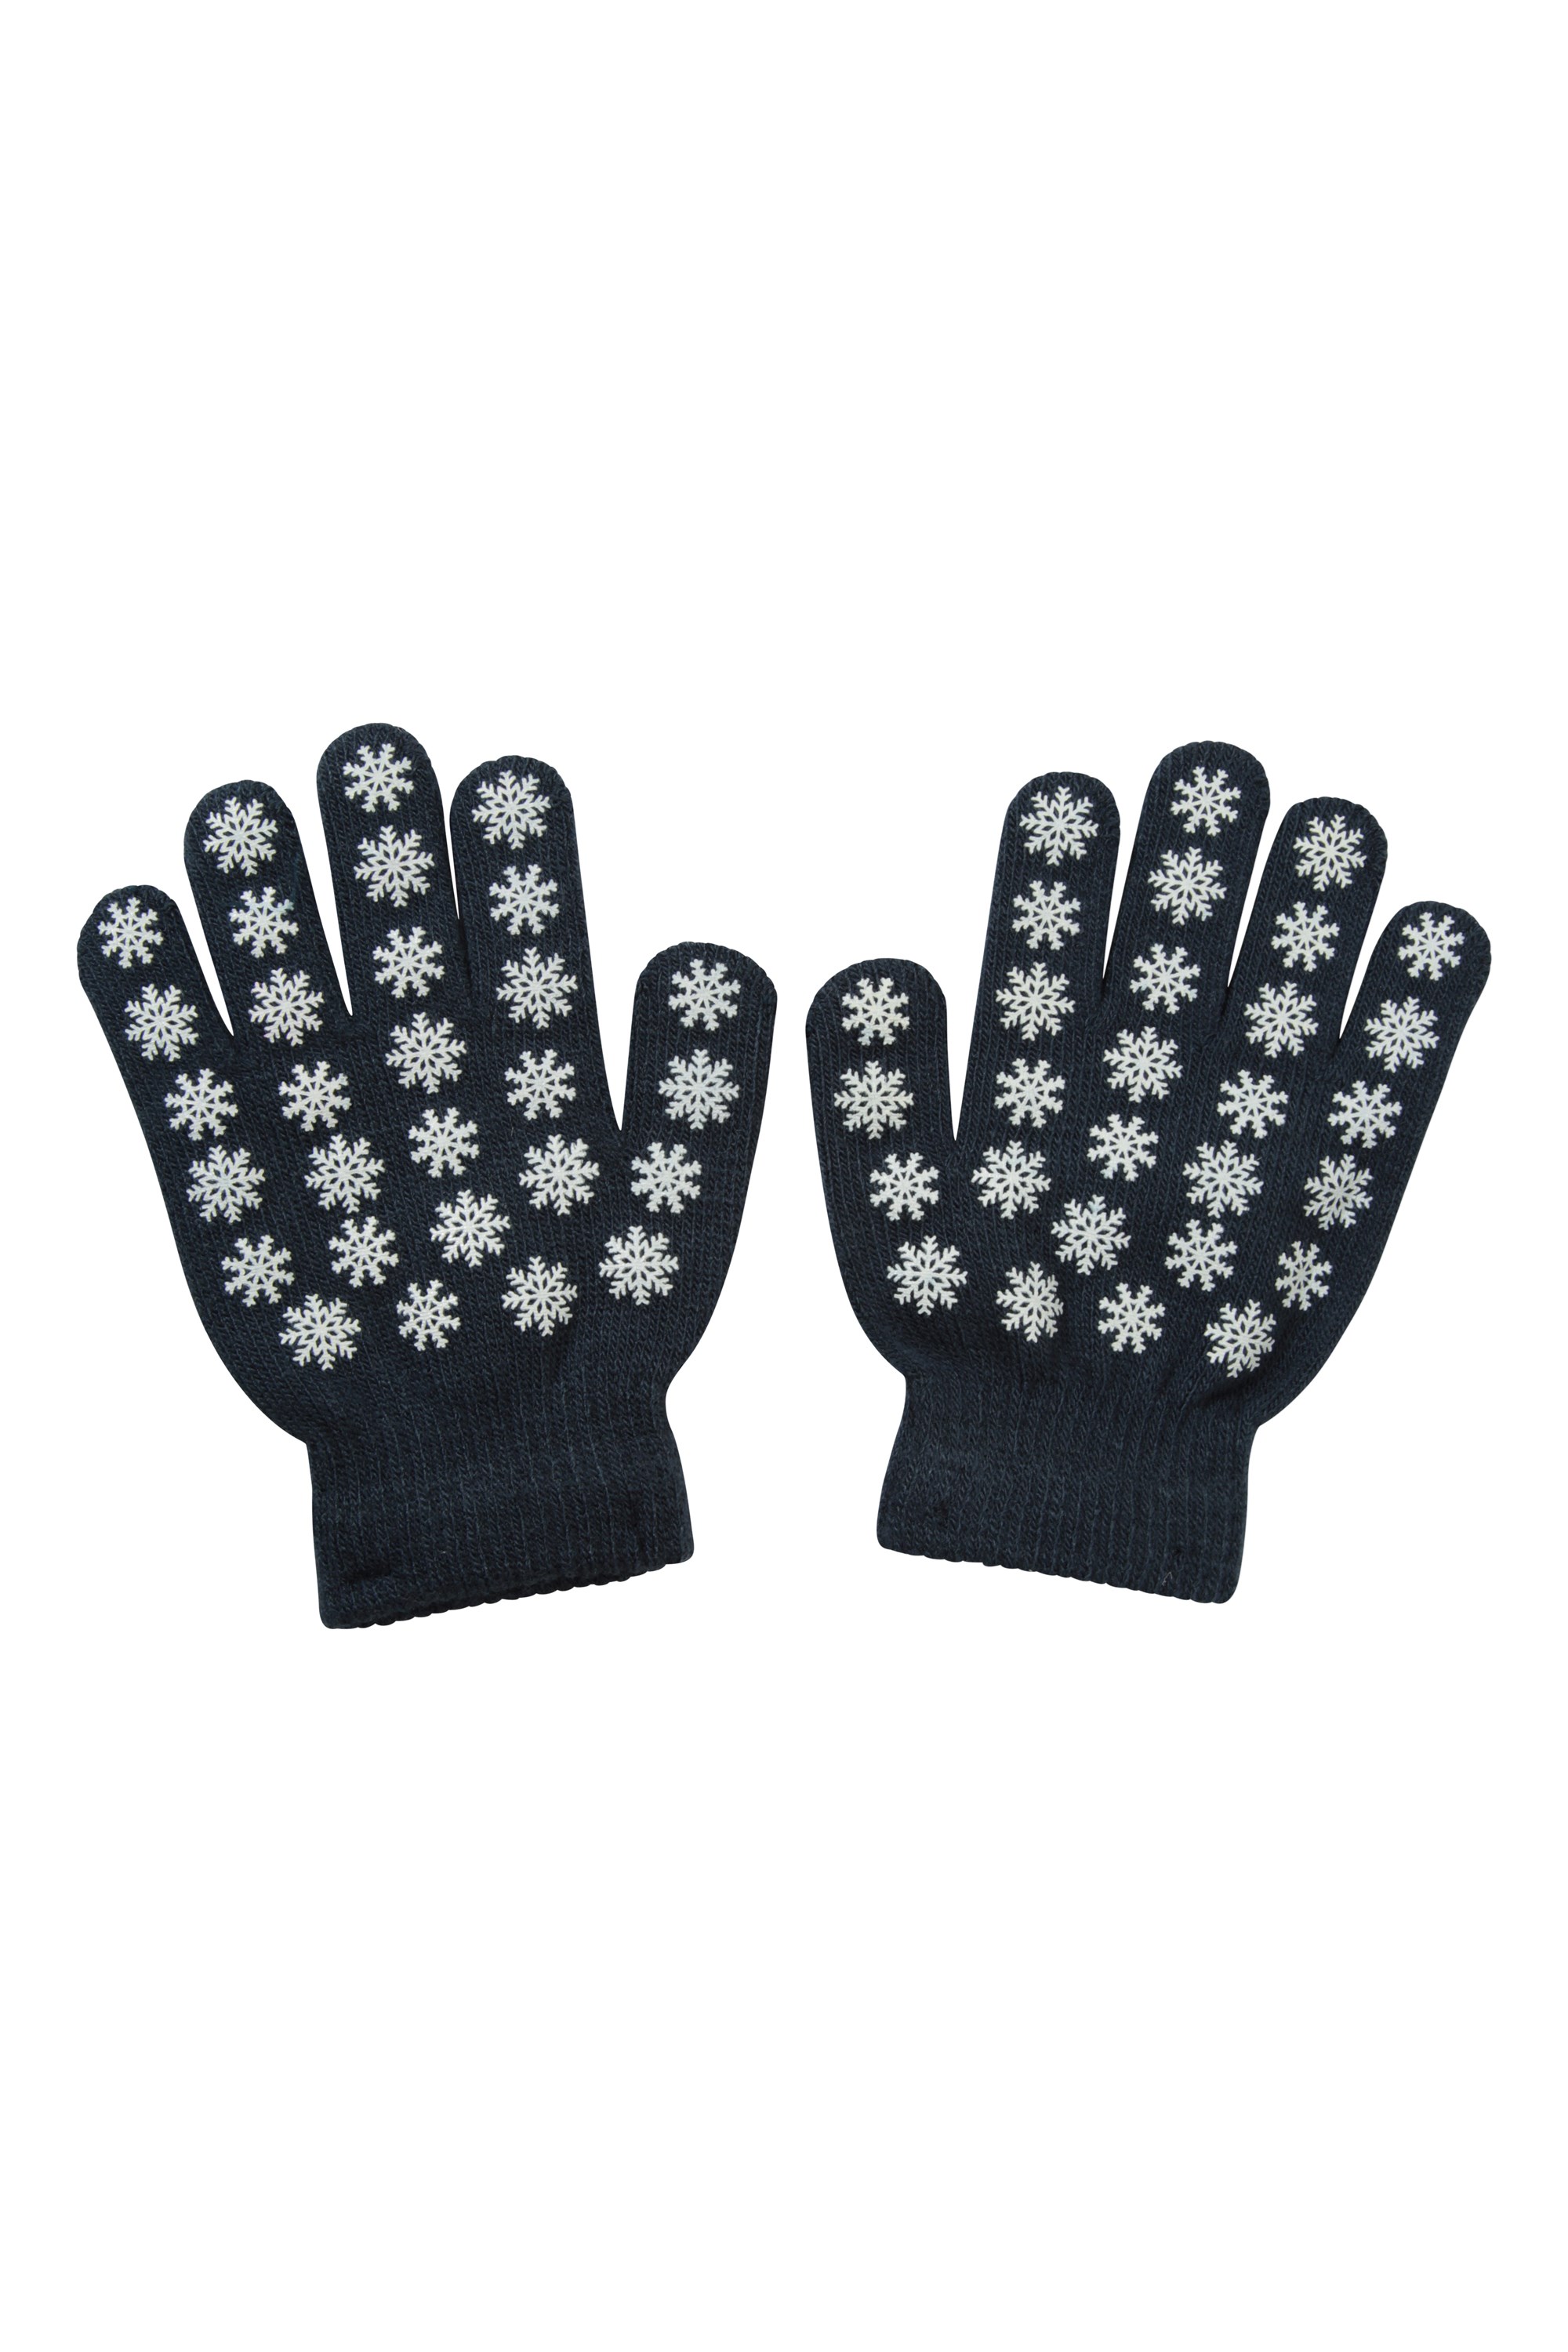 Halconia 2/3 Pack Kids Touchscreen Winter Knit Gloves w/Faux Fur Cuff 